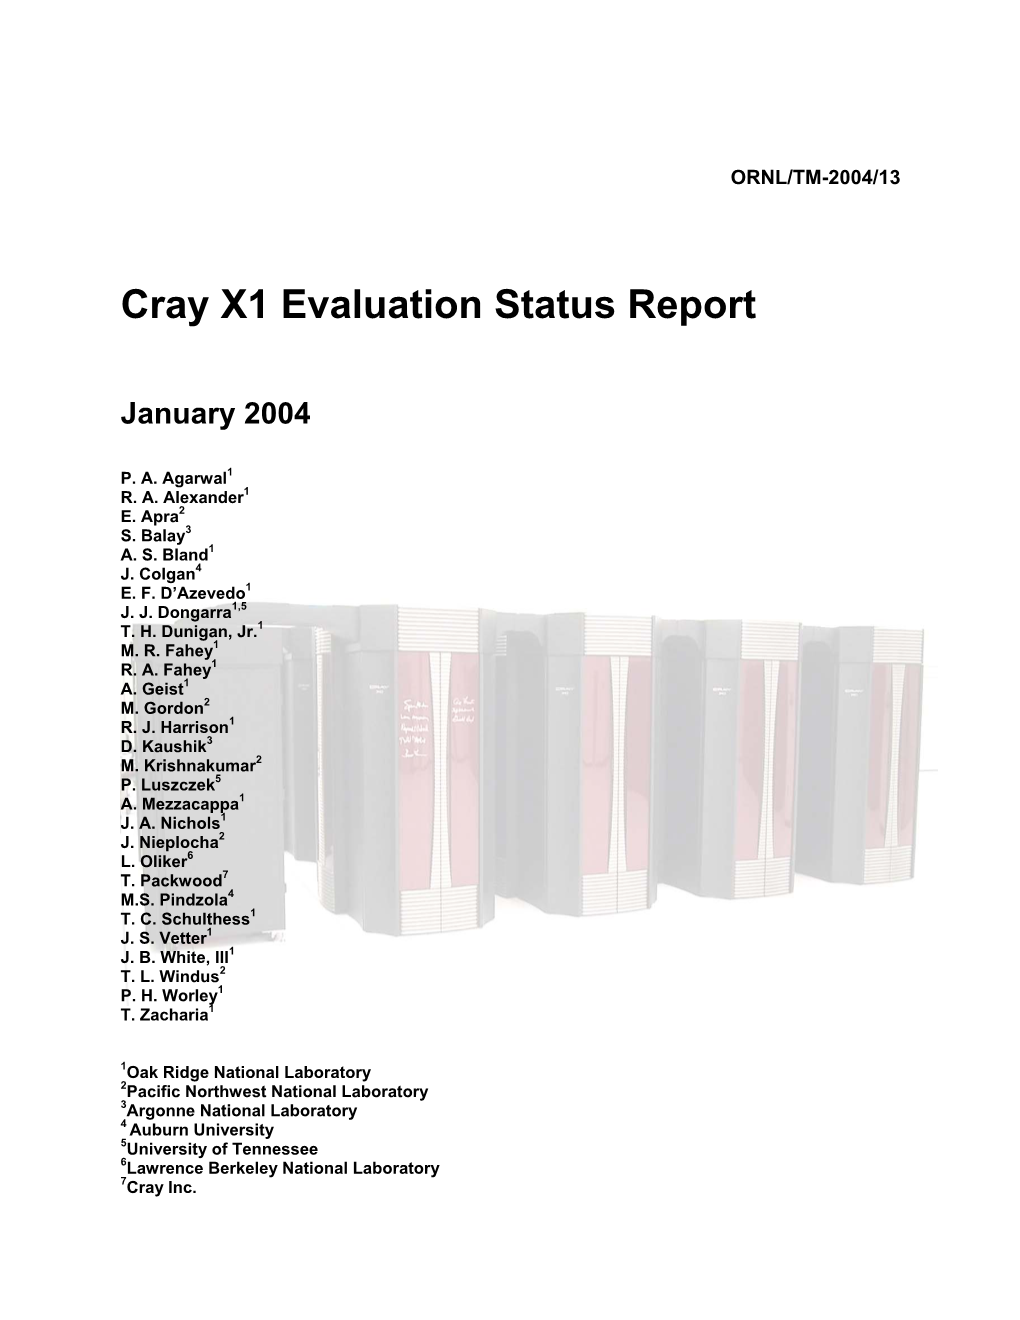 Cray X1 Evaluation Status Report